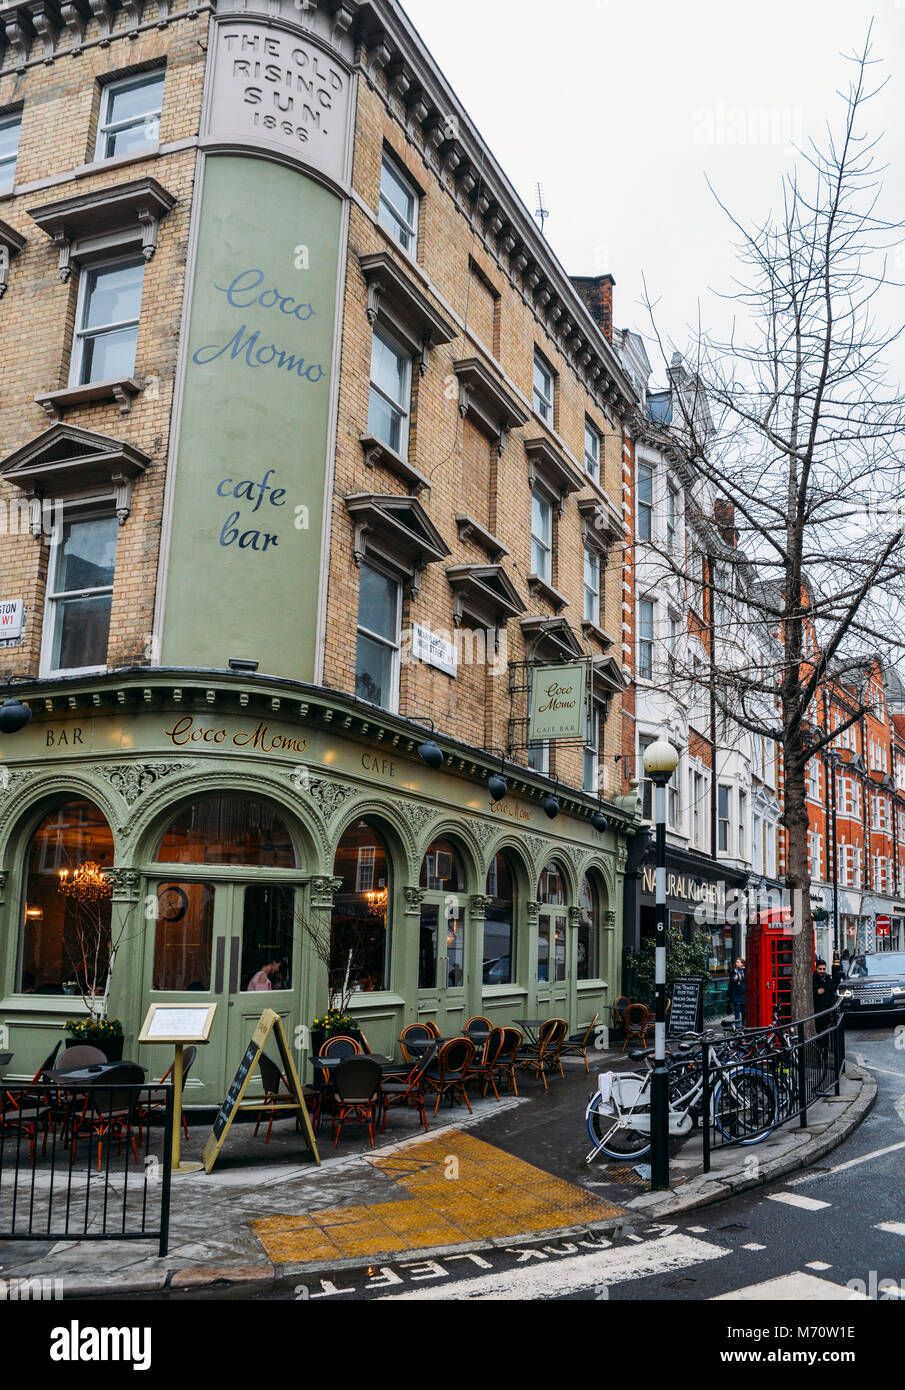 Coco Momo cafe bar on a street corner in Marylebone High Street, W1, London, UK Stock Photo